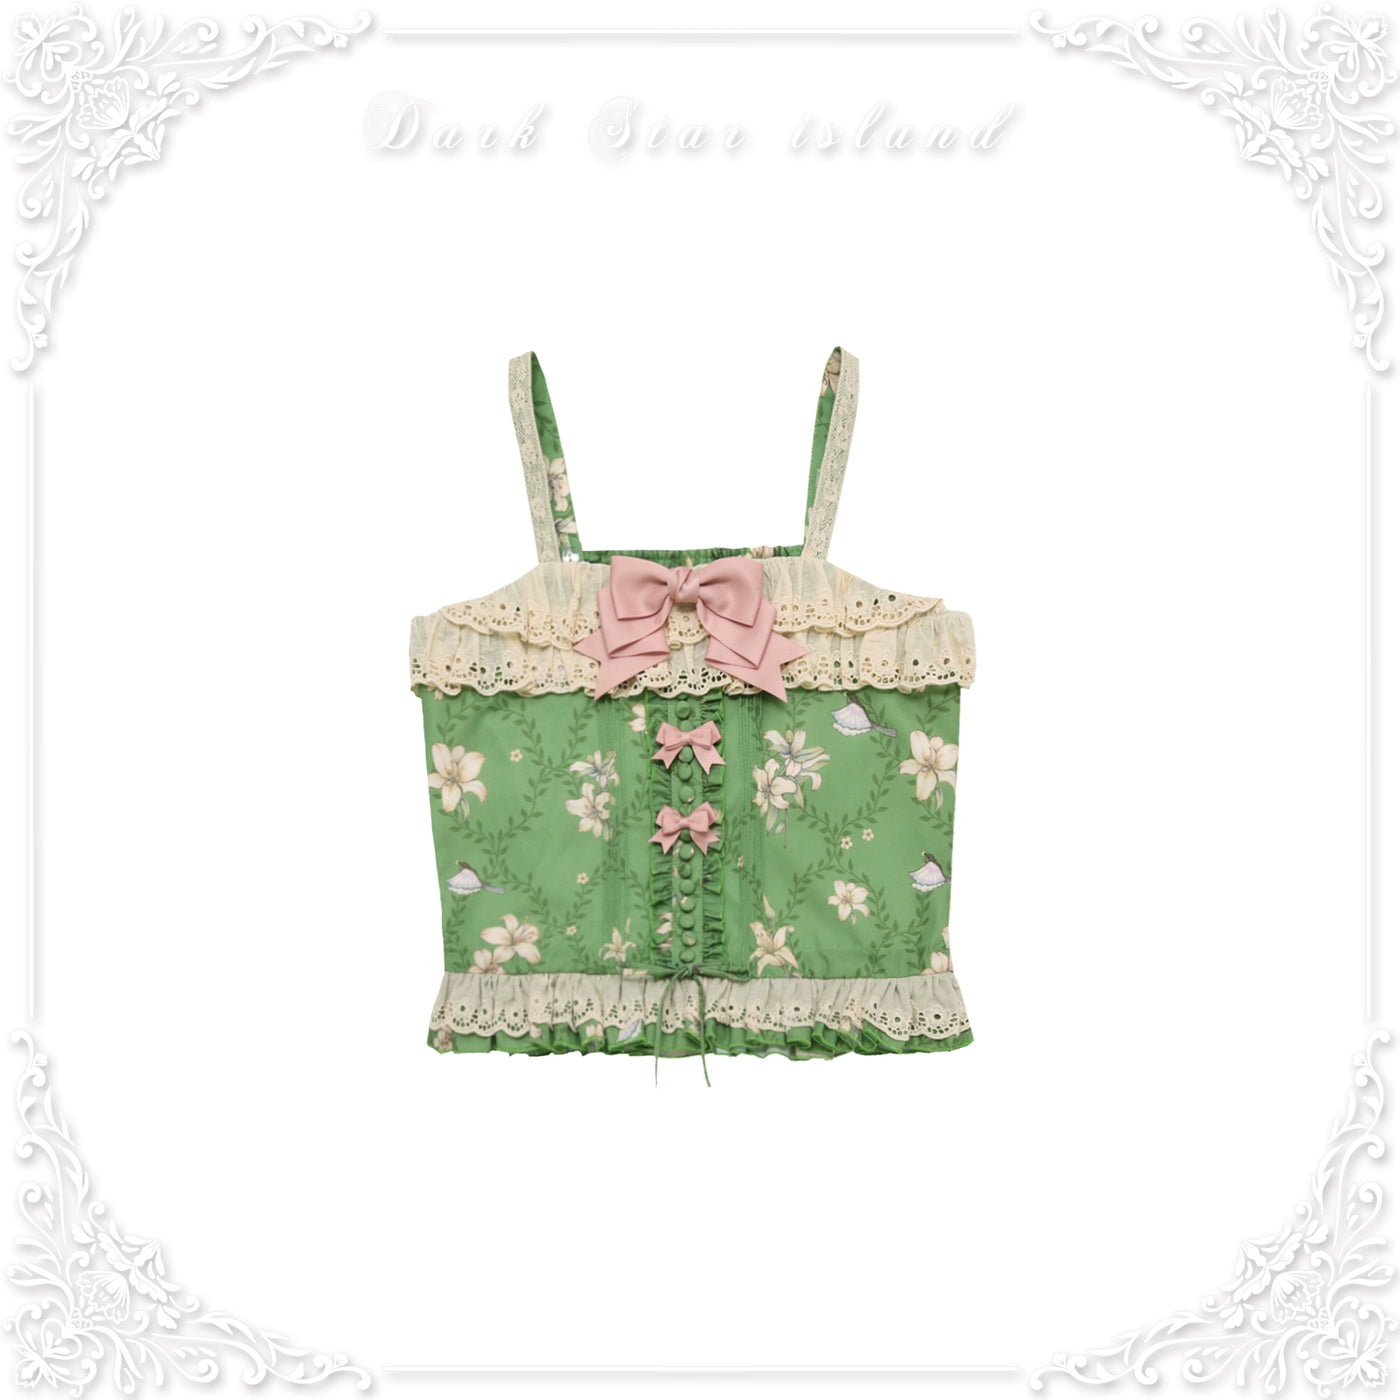 Dark Star Island~Lily&Mountain Breeze~Lily Print Lolita Camisole Skirt Set S Green top 